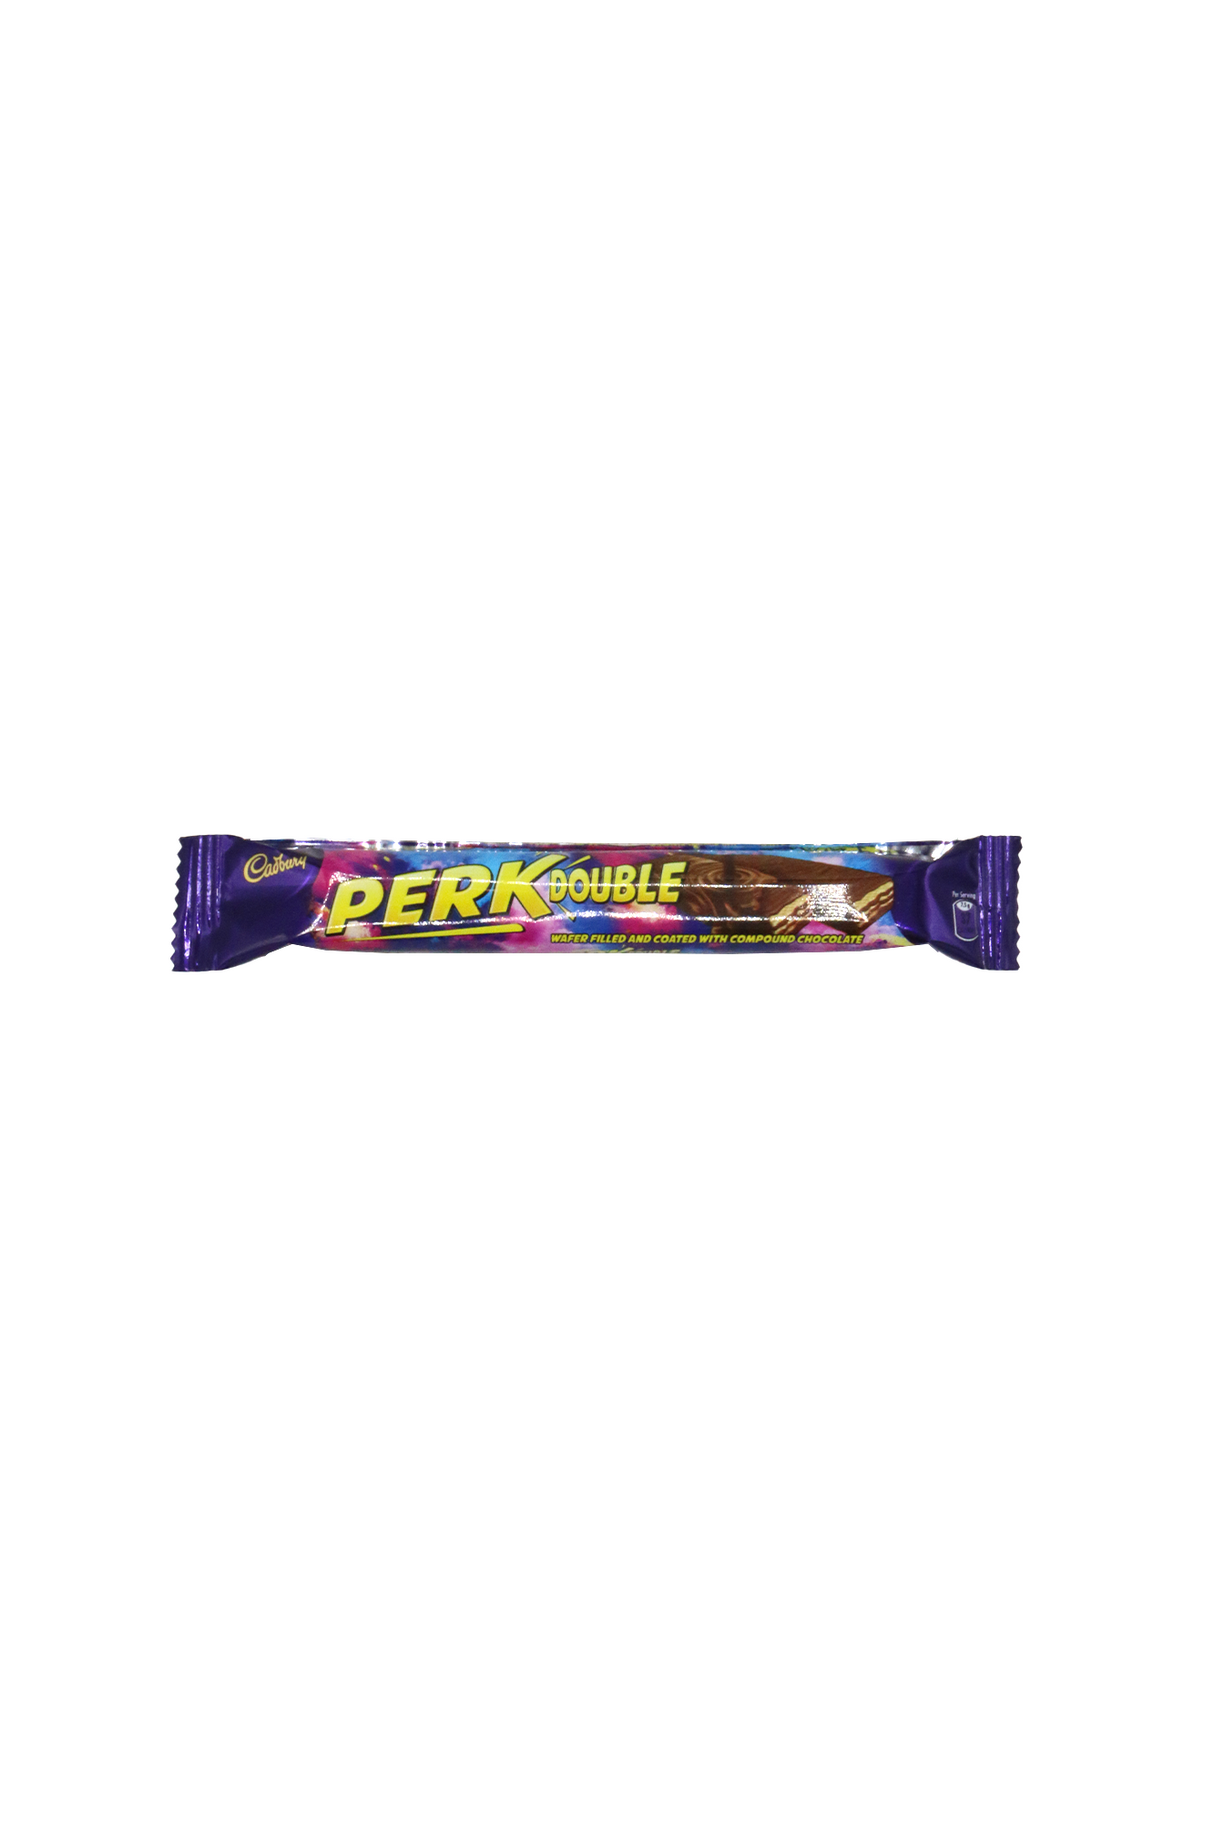 cadbury perk double 18g